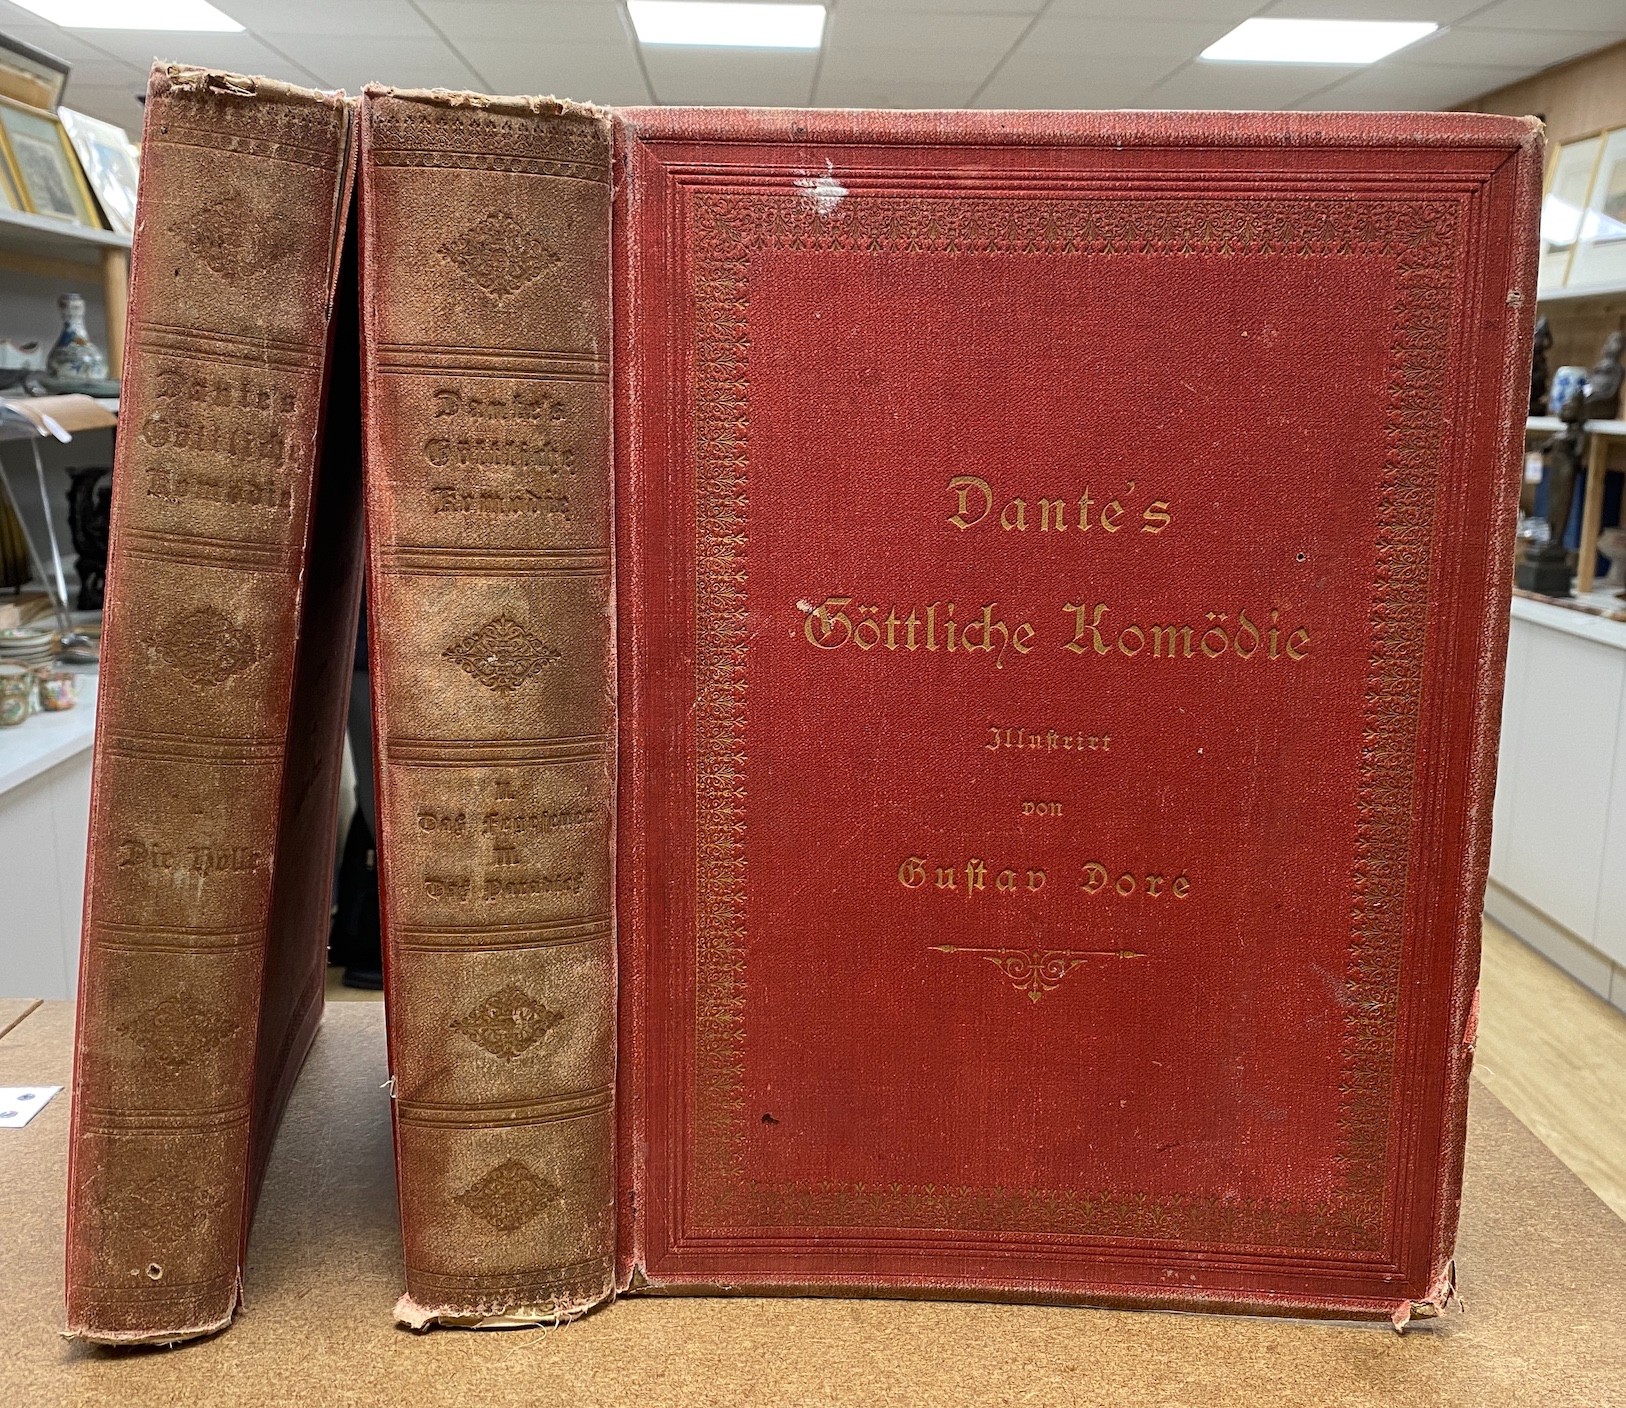 Alighieri, Dante, Göttliche Komödie (The Divine Comedy), two volumes                                                                                                                                                        